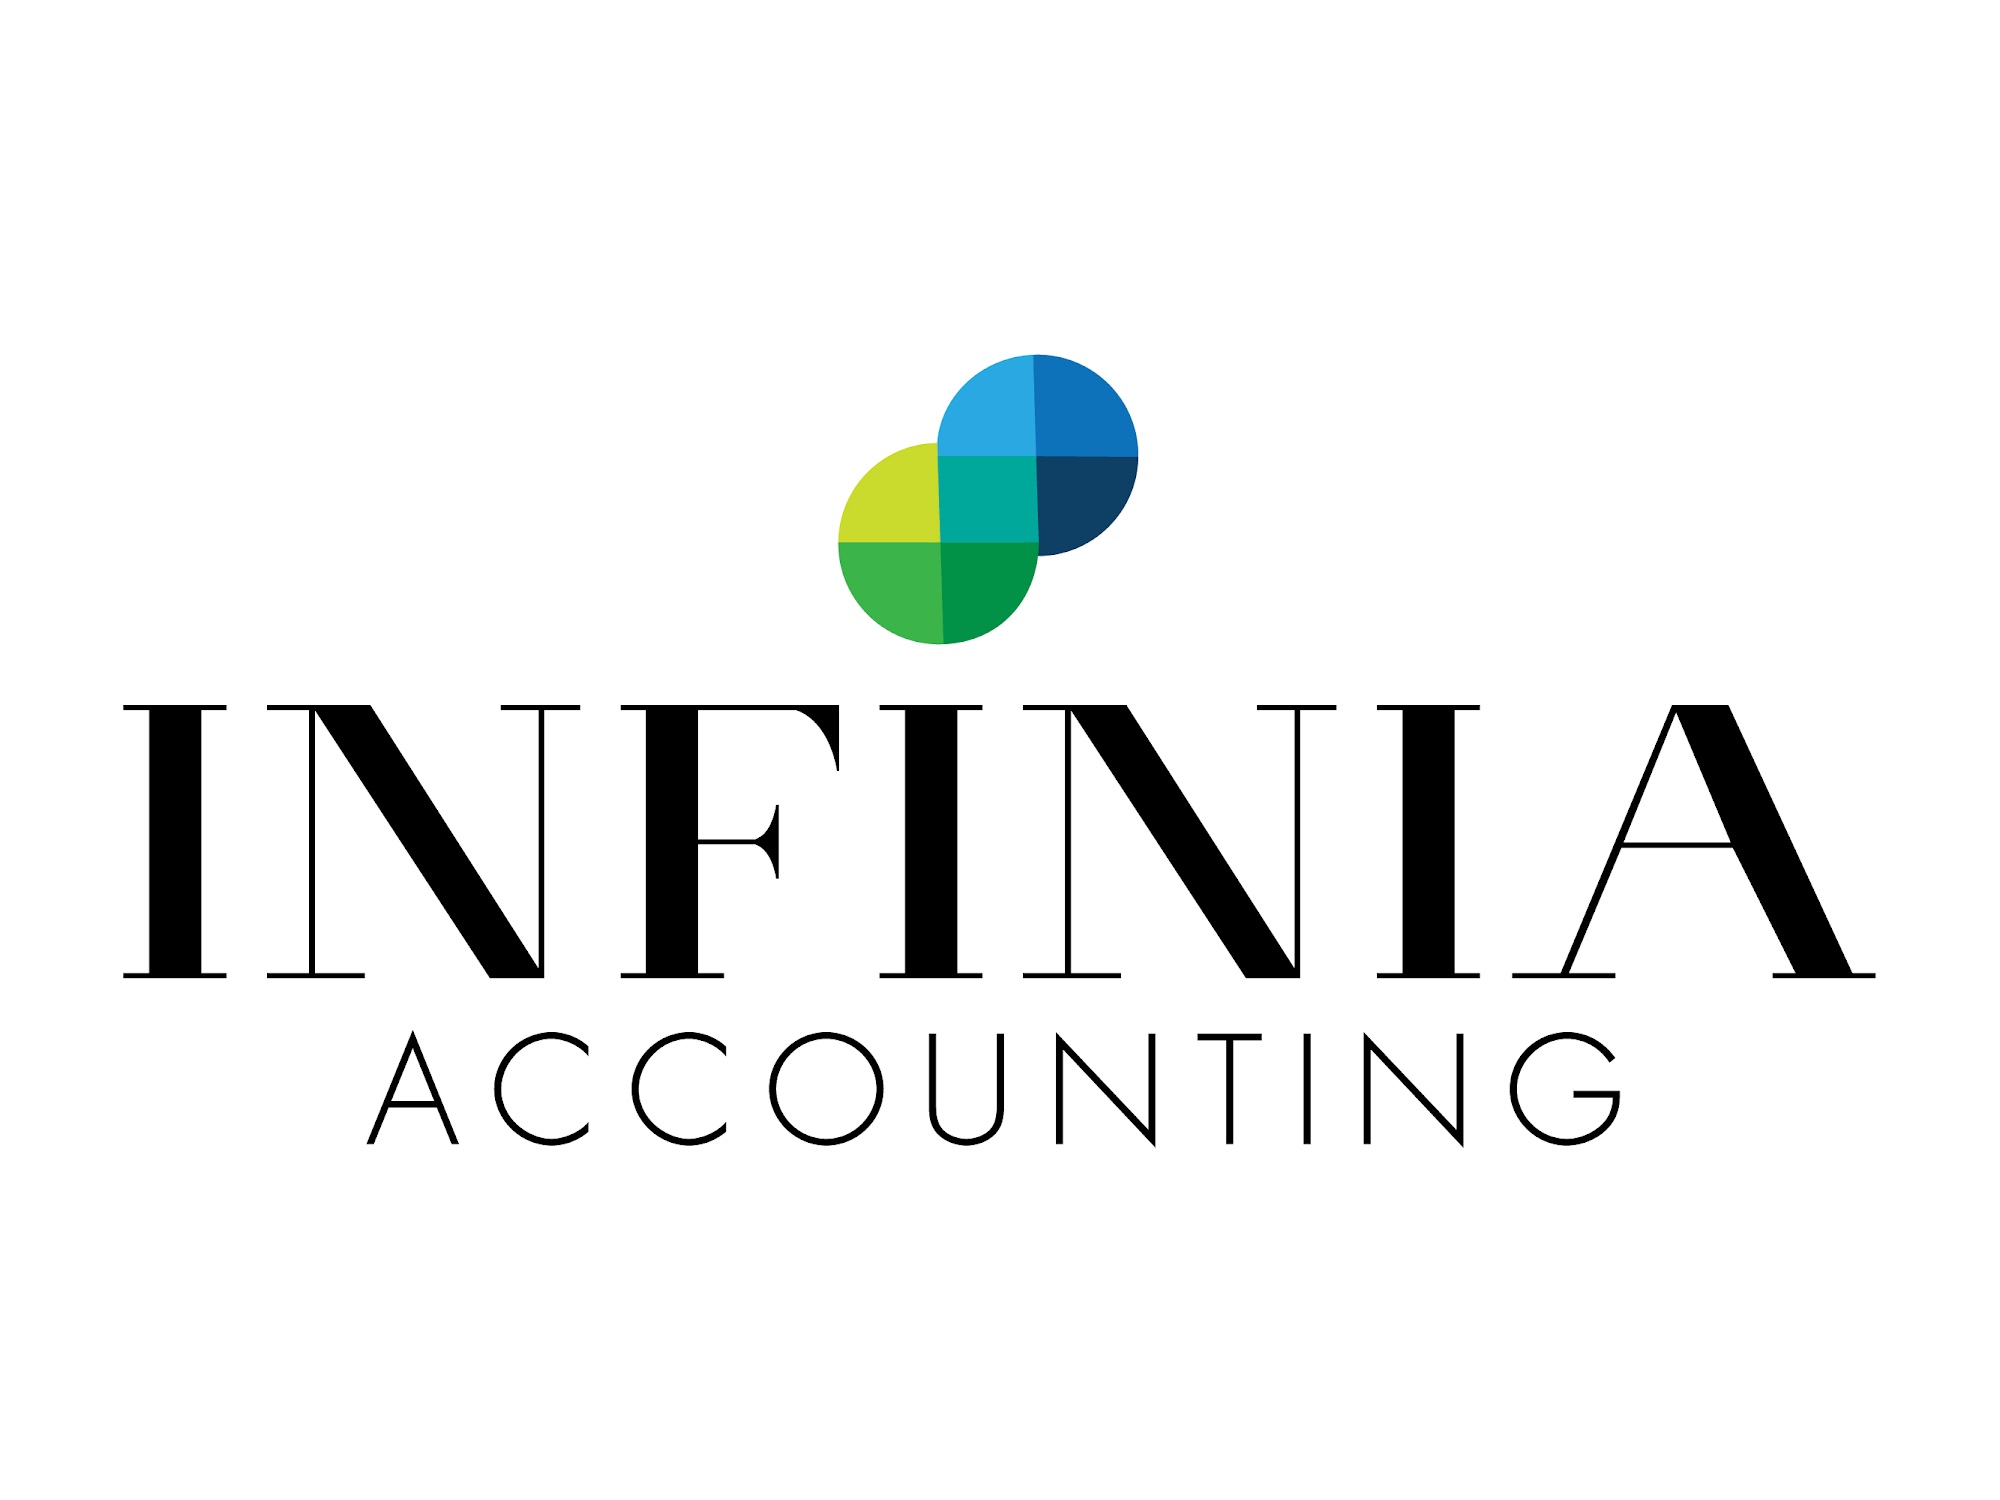 Infinia Accounting